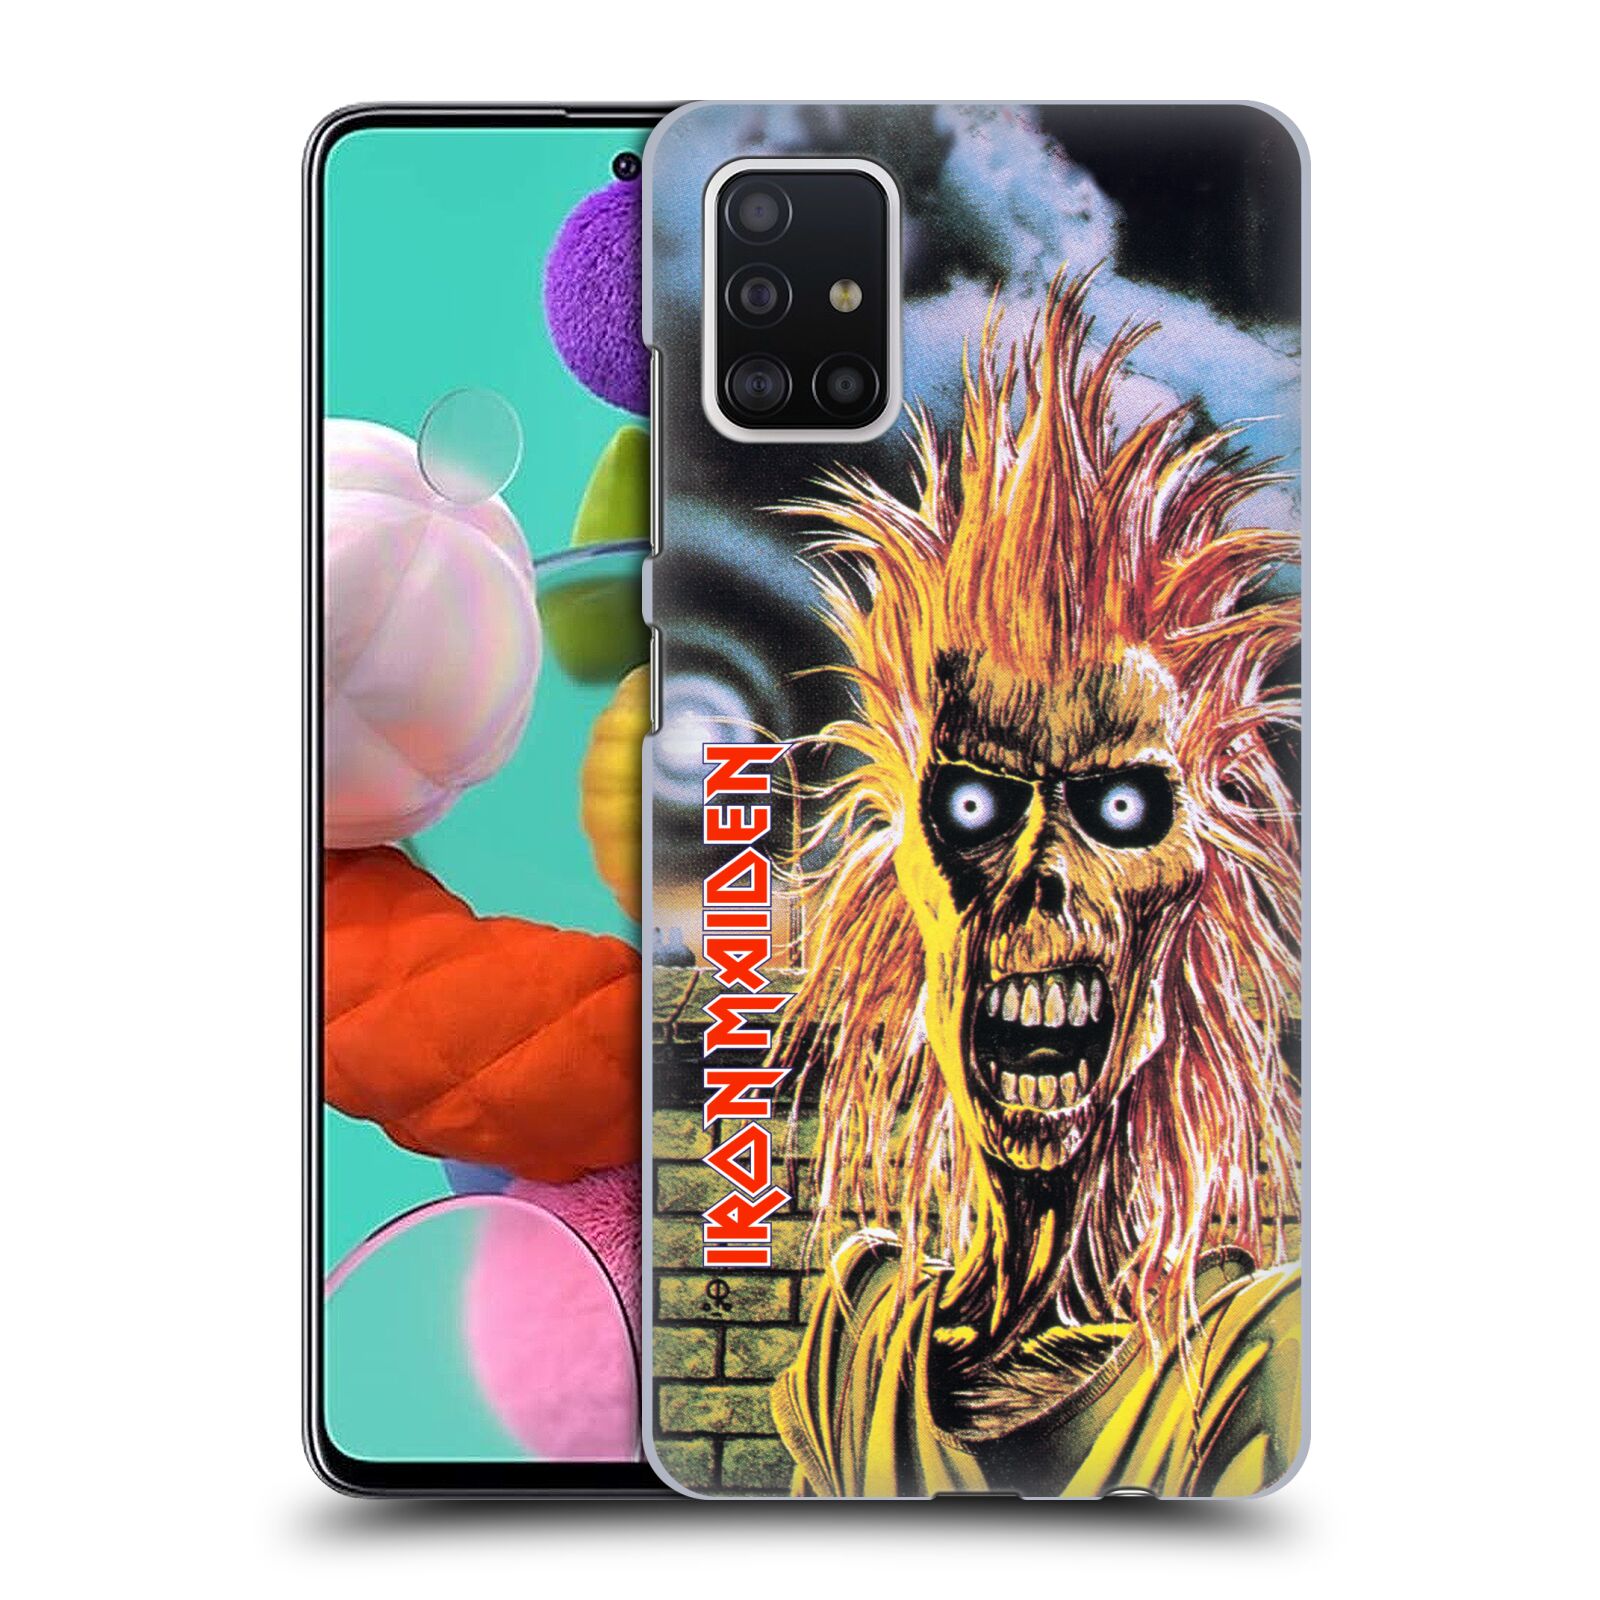 Pouzdro na mobil Samsung Galaxy A51 - HEAD CASE - Heavymetalová skupina Iron Maiden punker